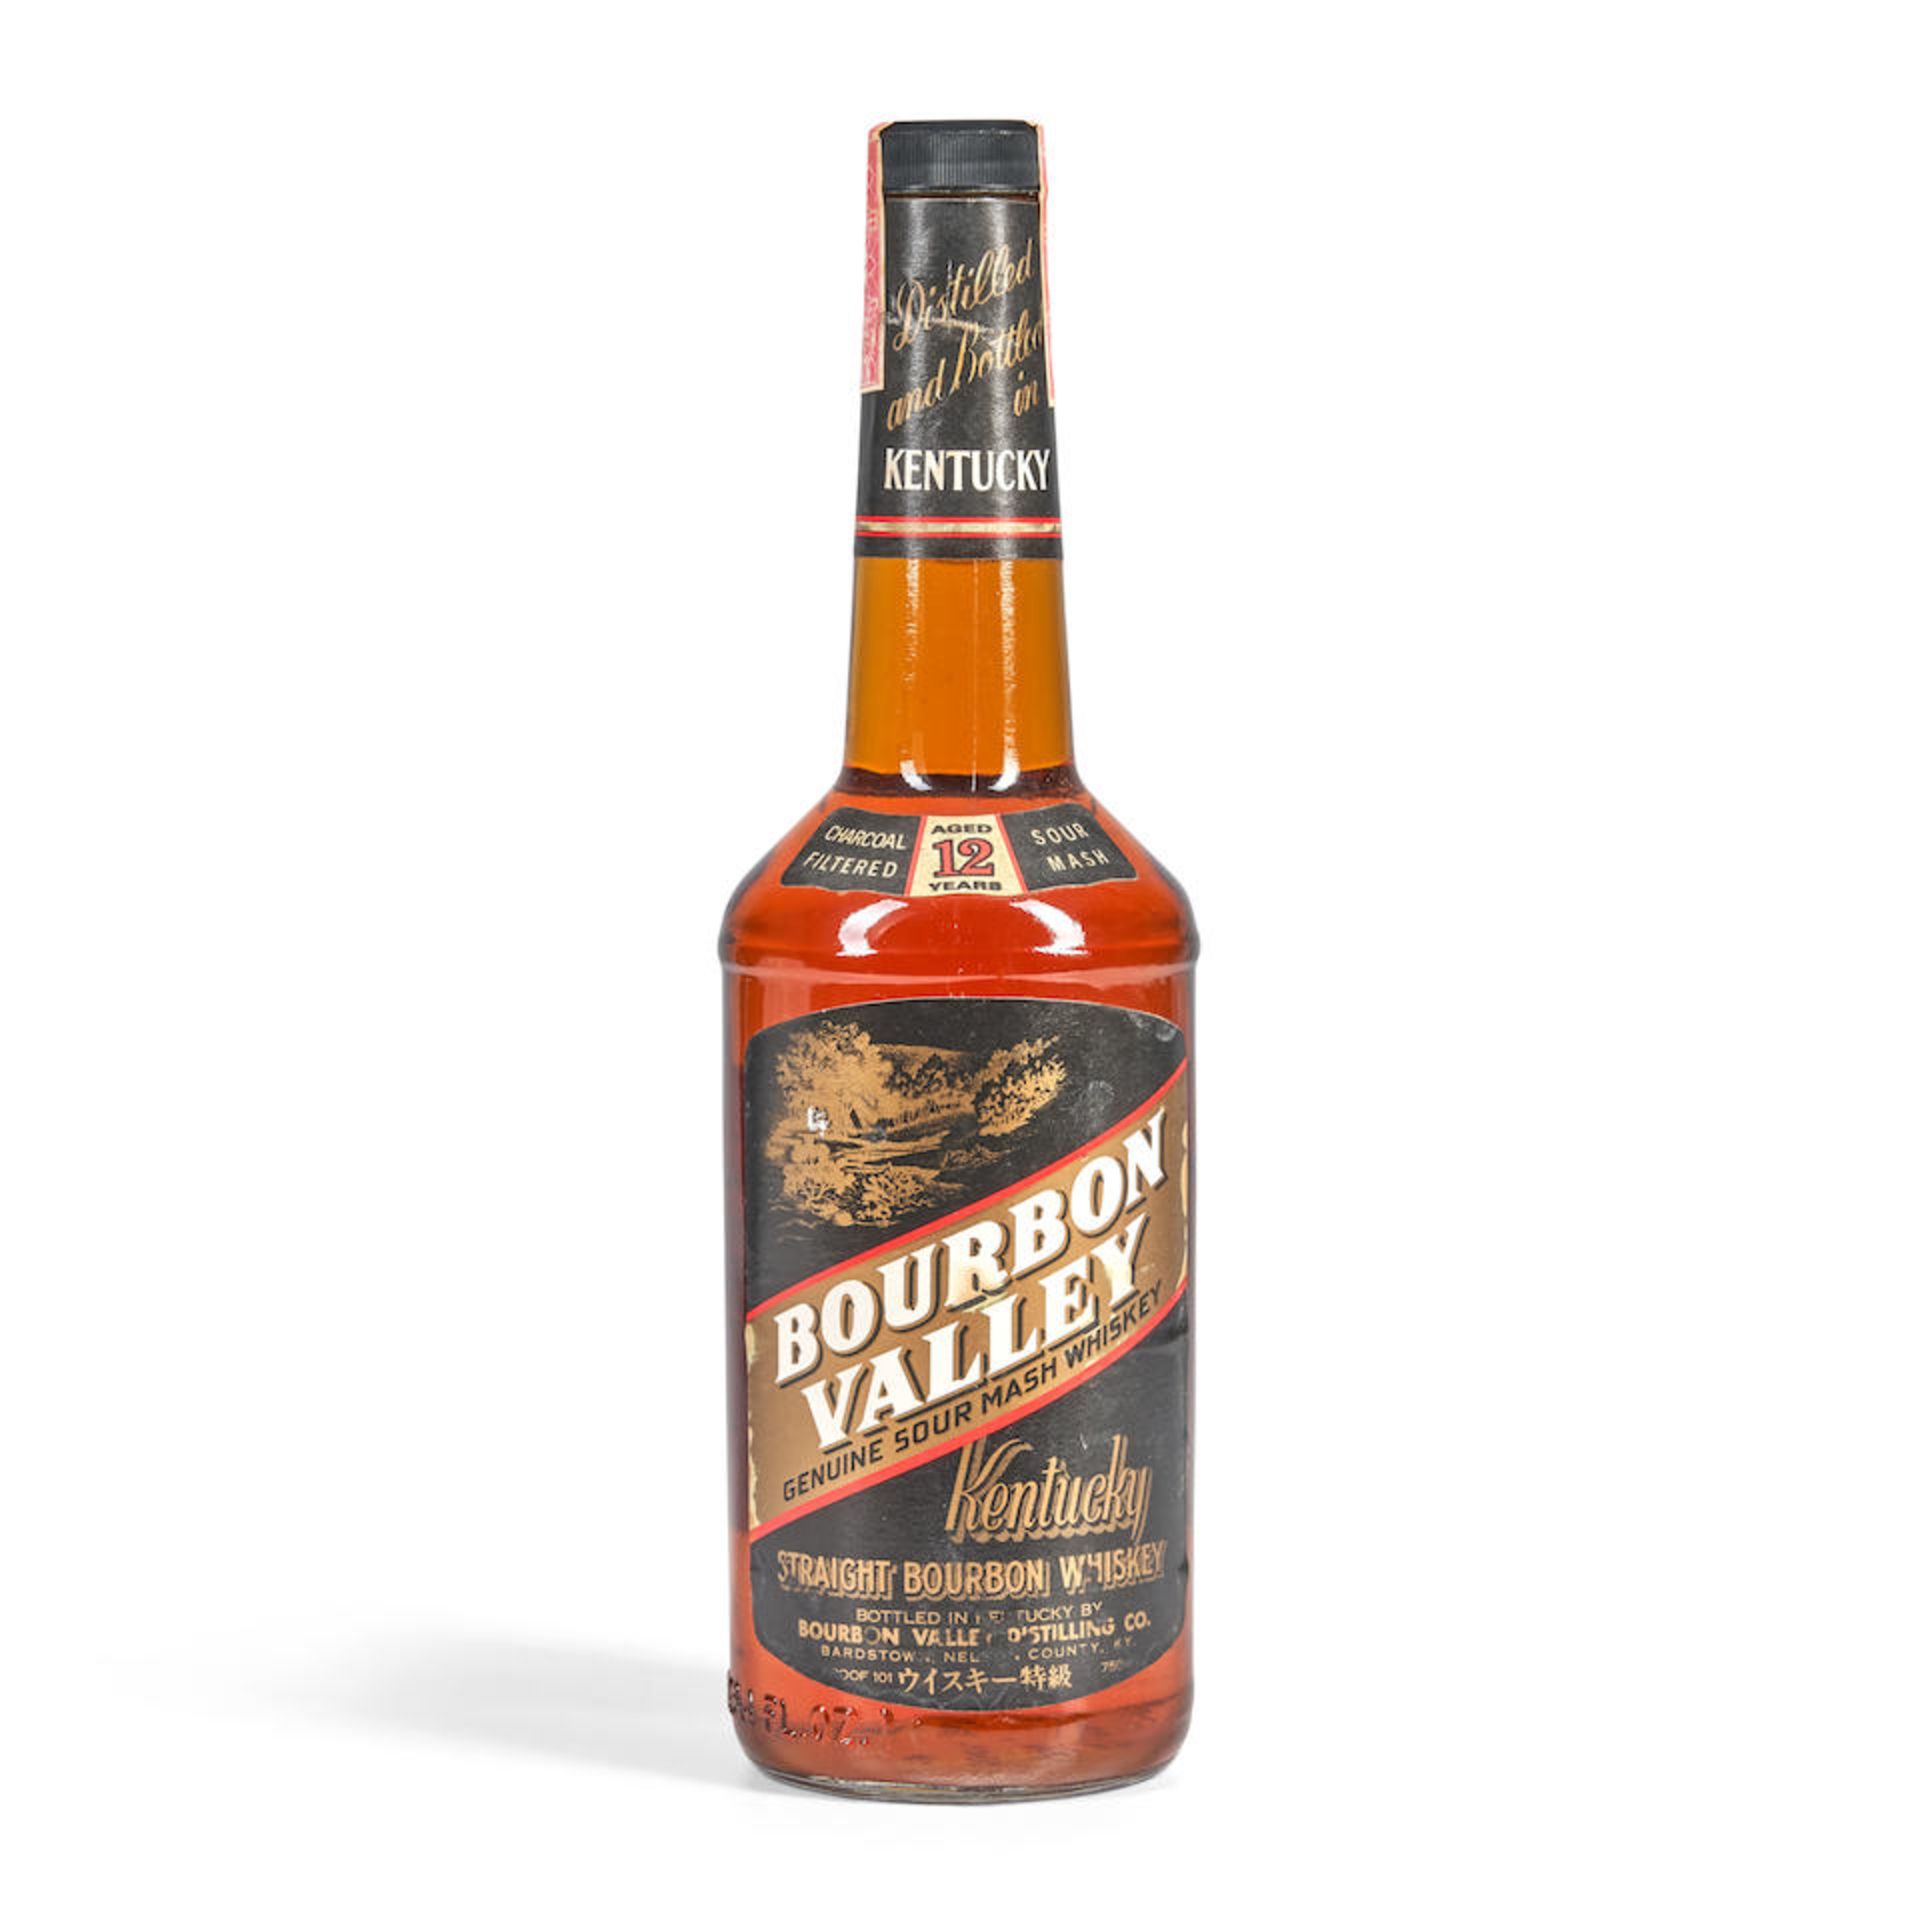 Bourbon Valley 12 Years Old (1 750ml bottle)